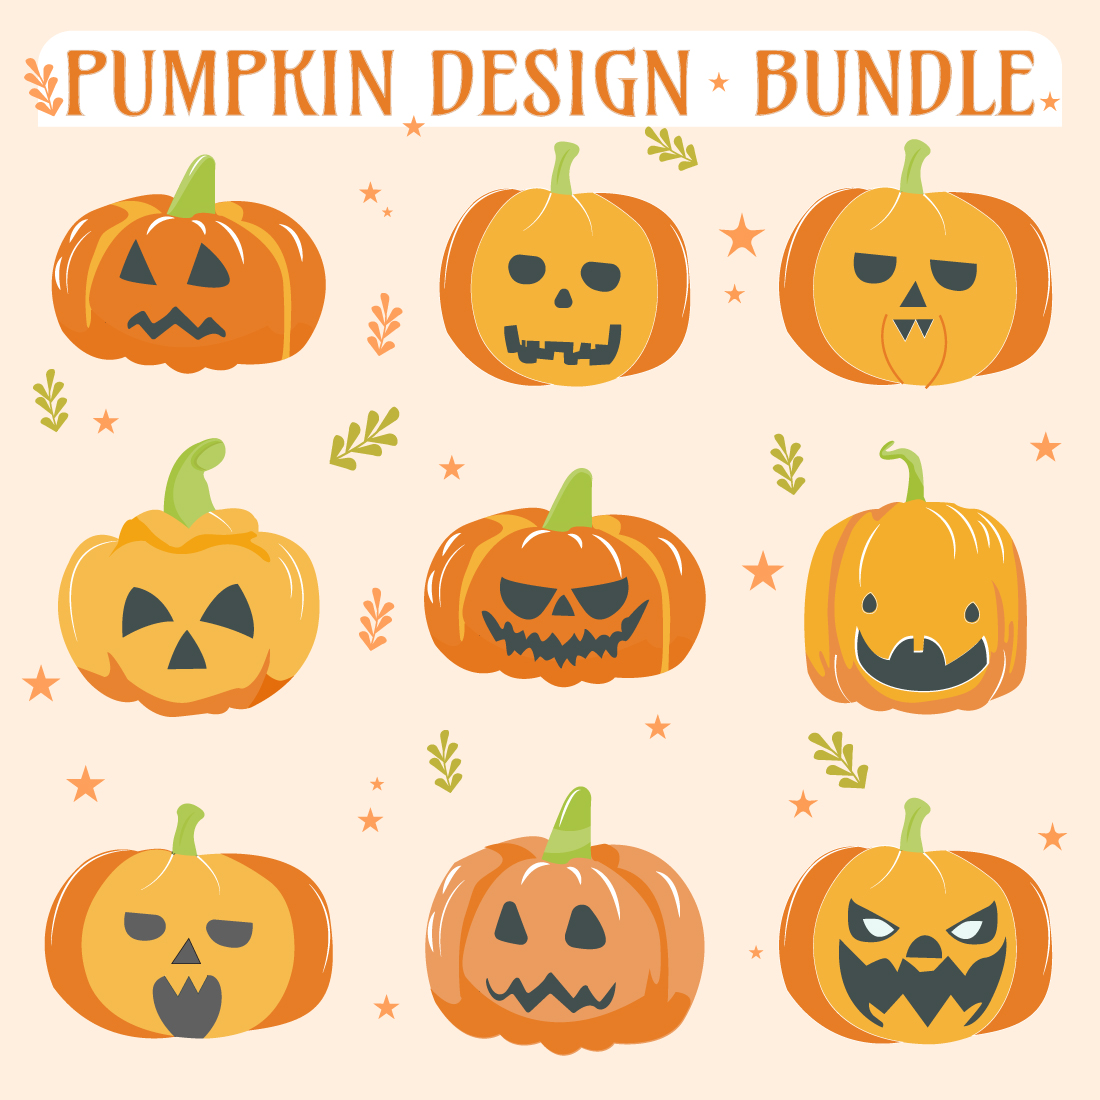 Set of Halloween Pumpkin bundle Vector Art, Clipart pumpkin vector elements cover image.